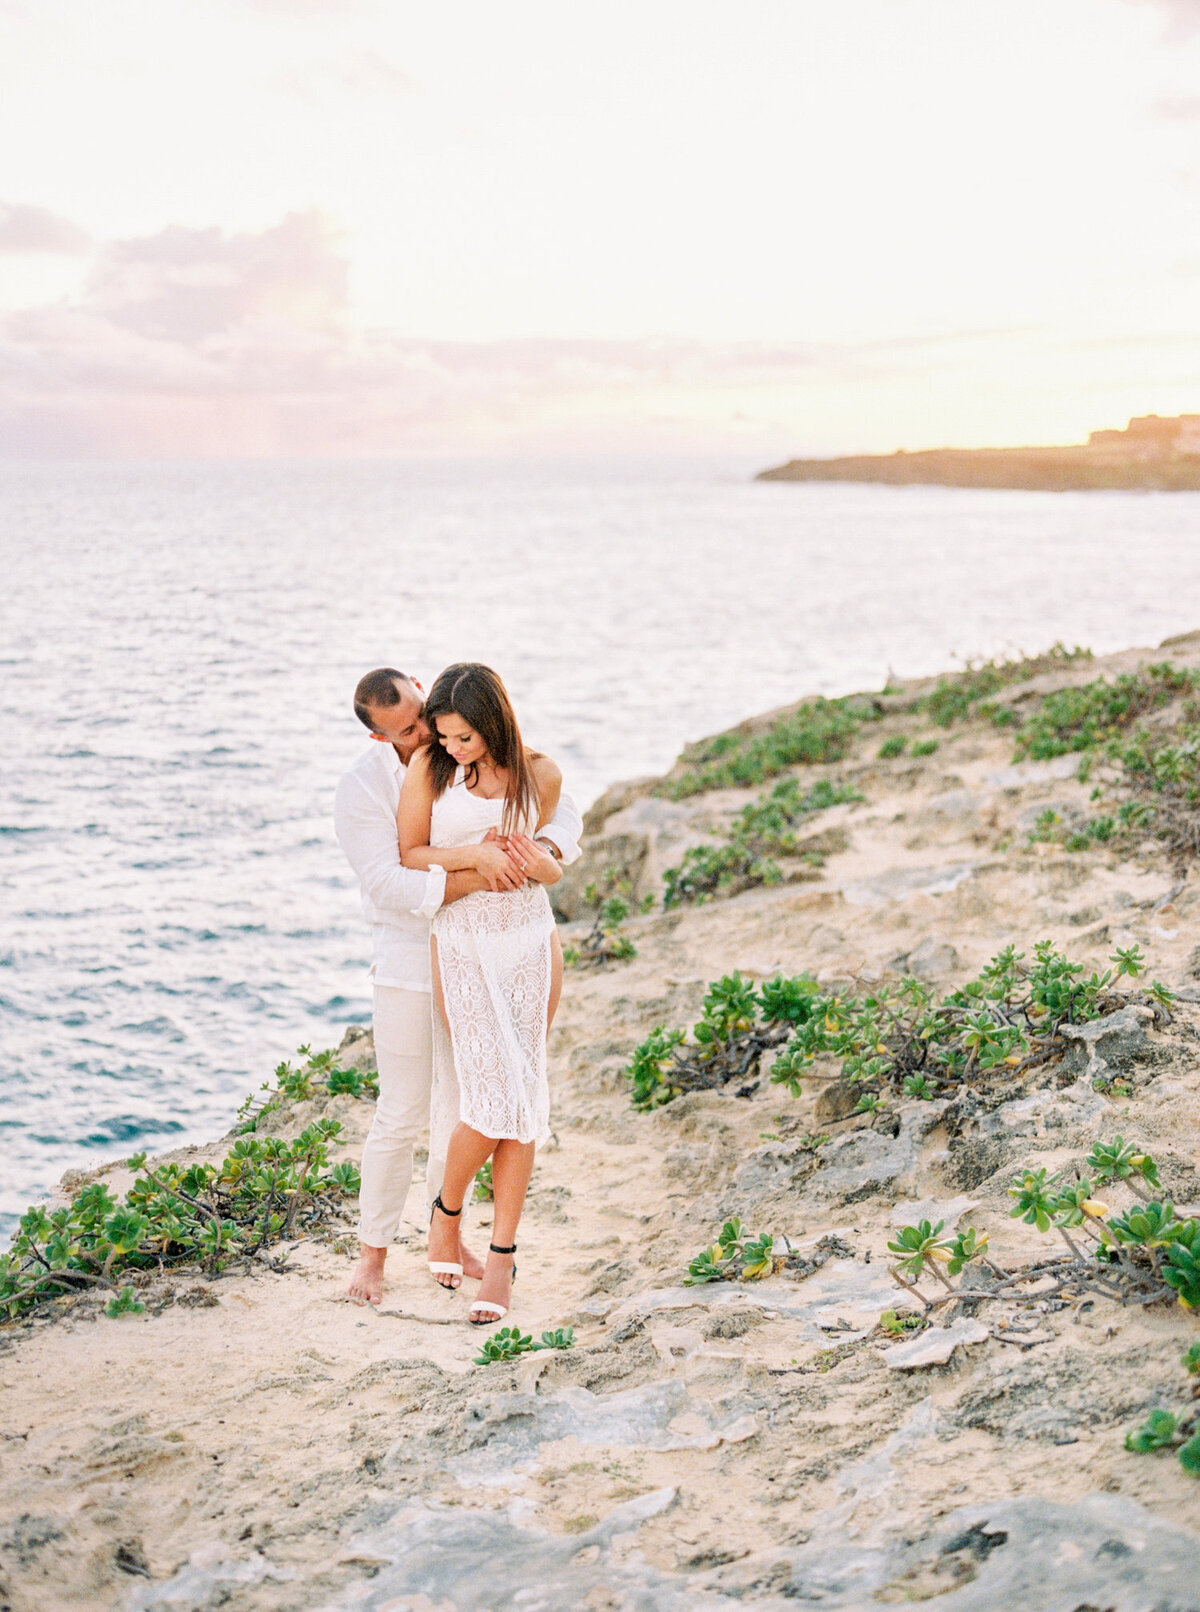 Anna+Gray | Hawaii Wedding & Lifestyle Photography | Ashley Goodwin Photography